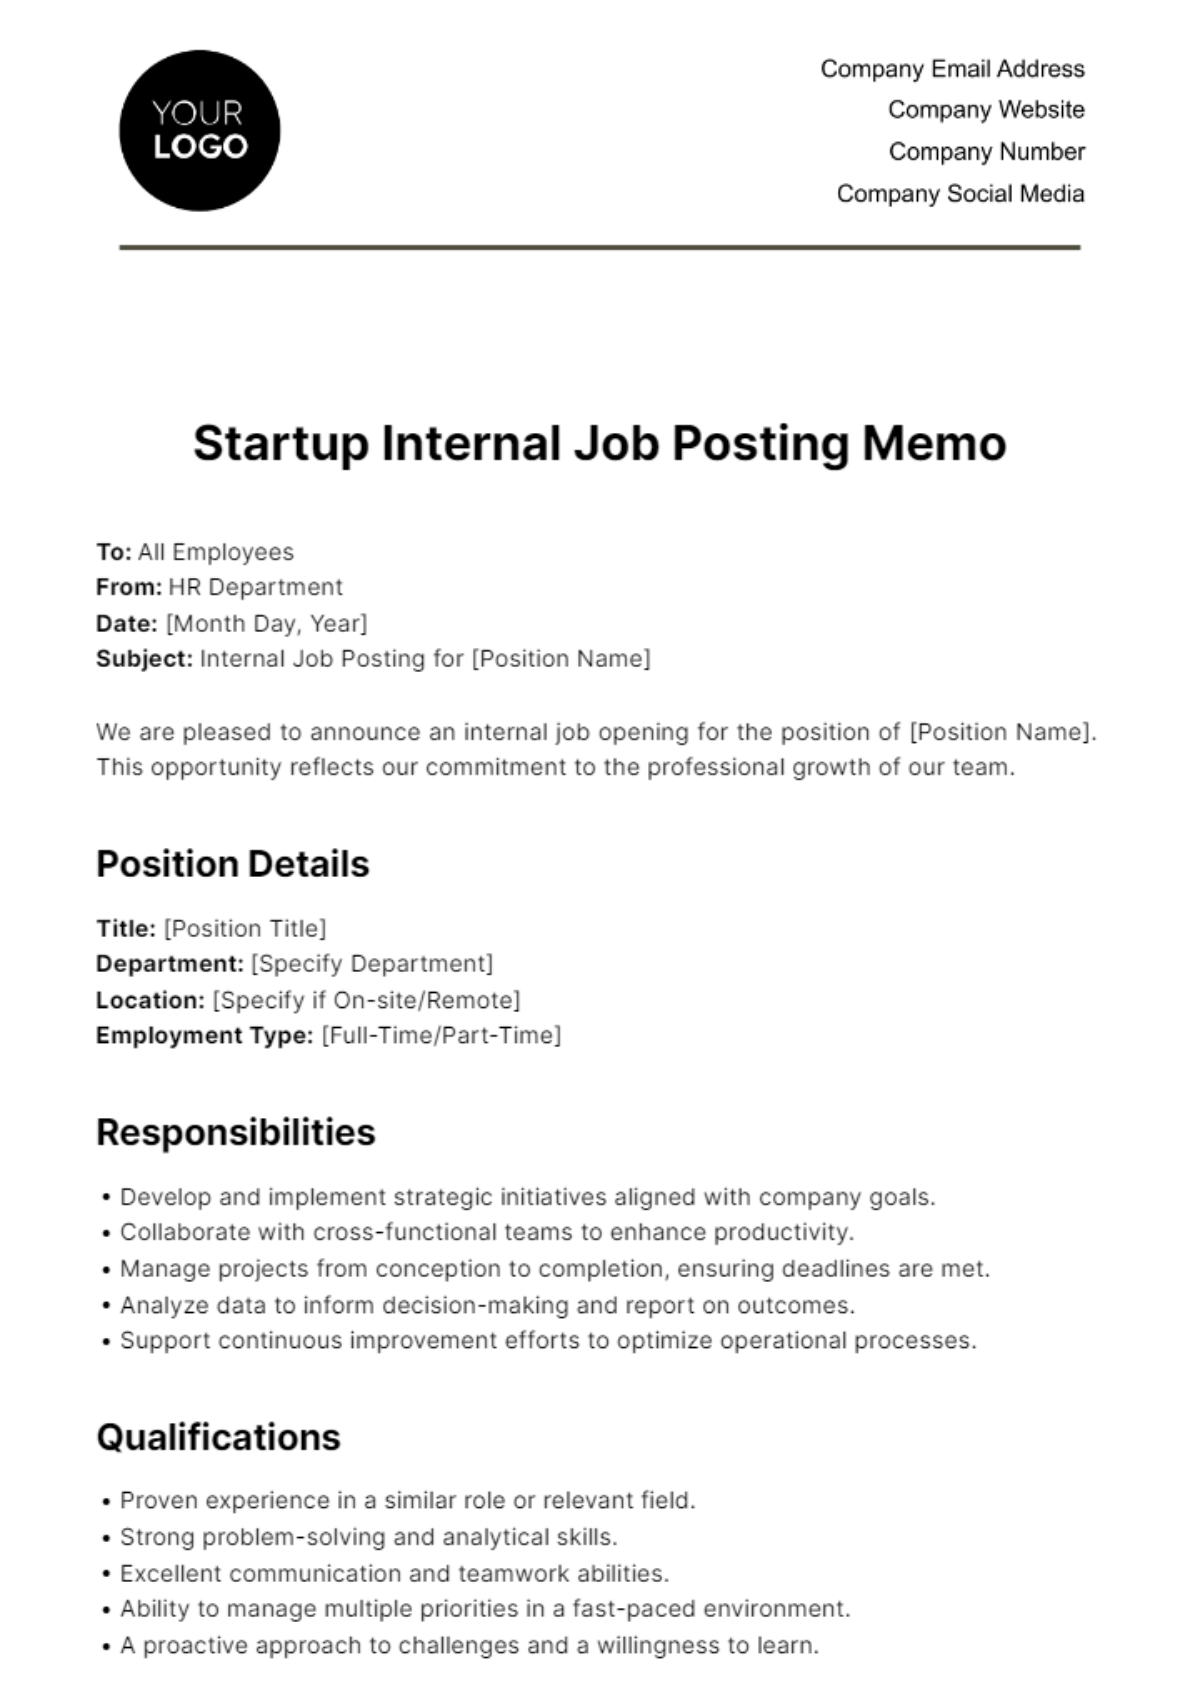 Startup Internal Job Posting Memo Template